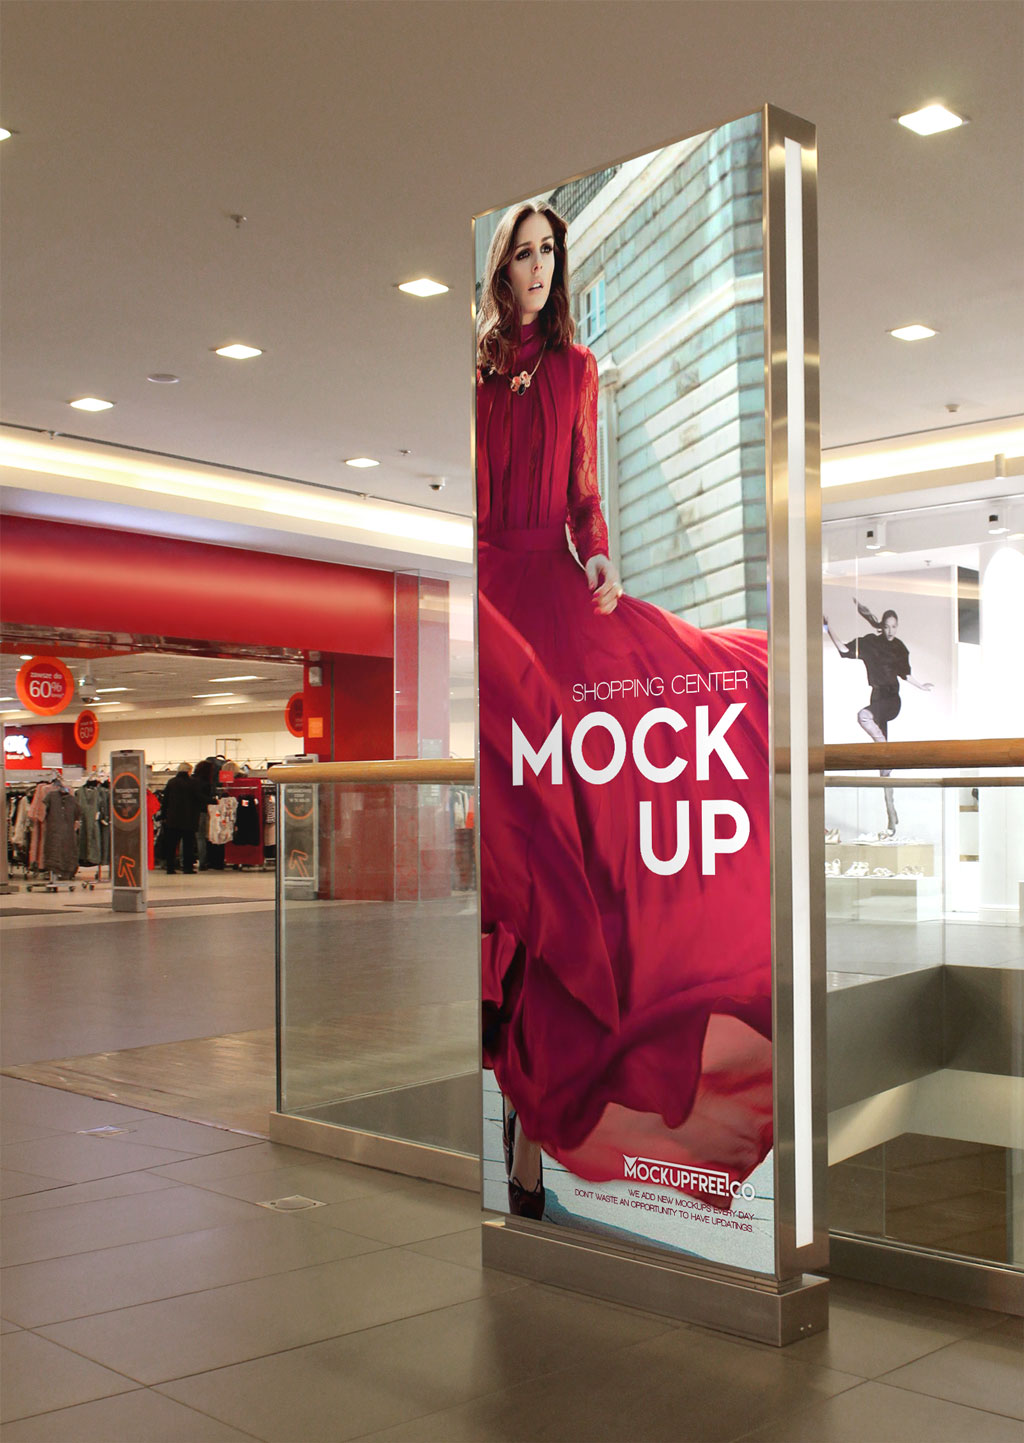 Free-indoor-advertising-shopping-center-mockup-psd-2